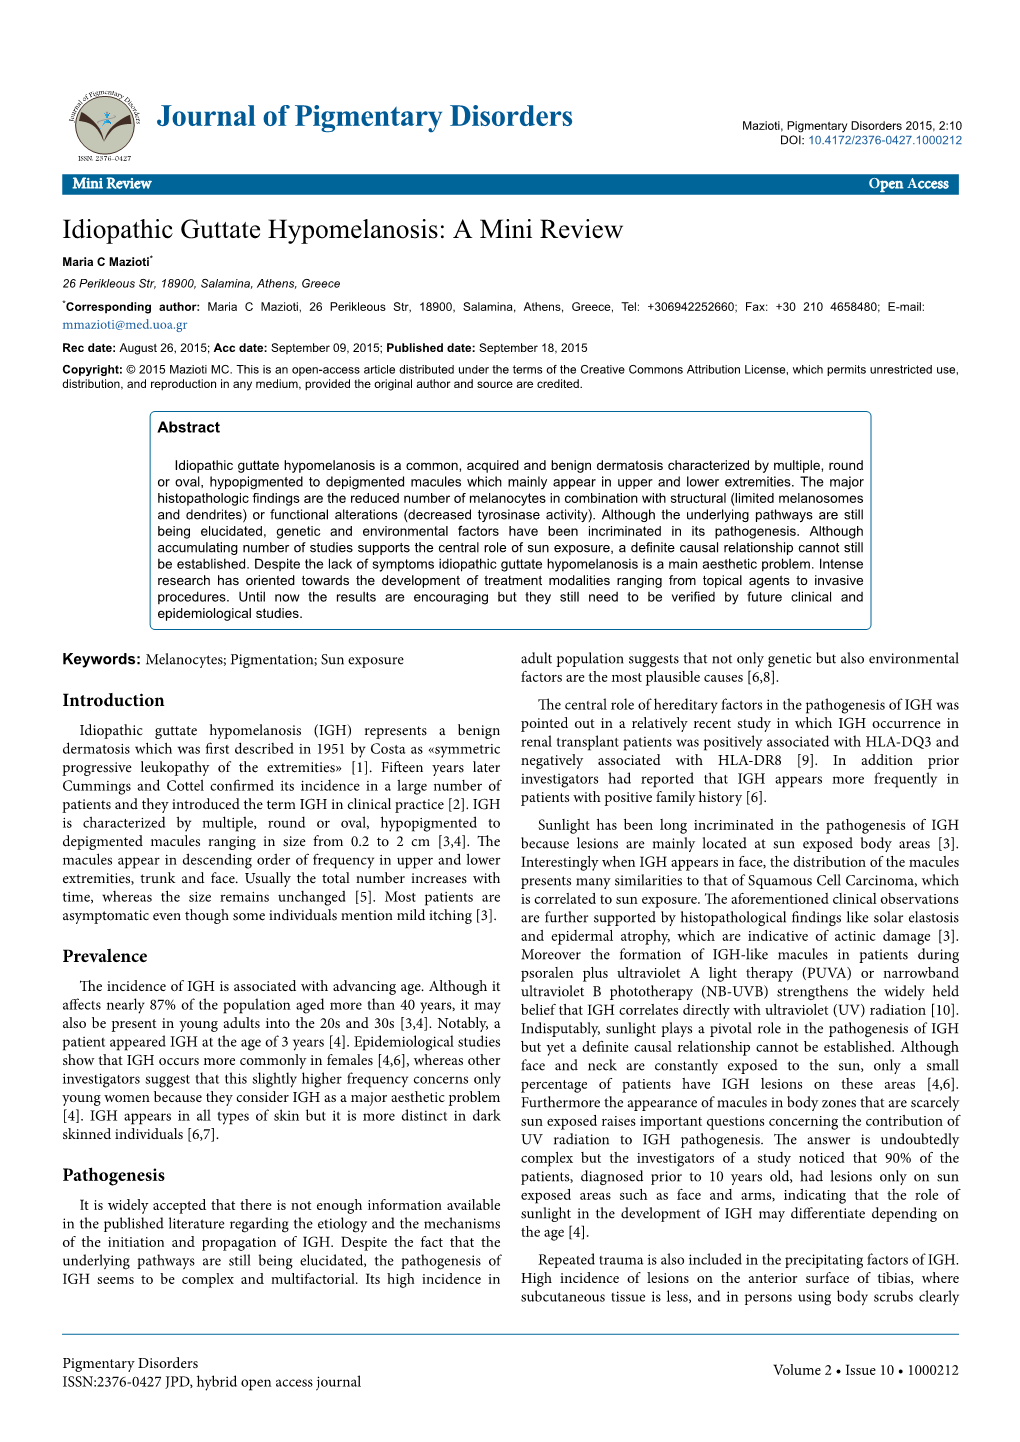 Idiopathic Guttate Hypomelanosis: a Mini Review